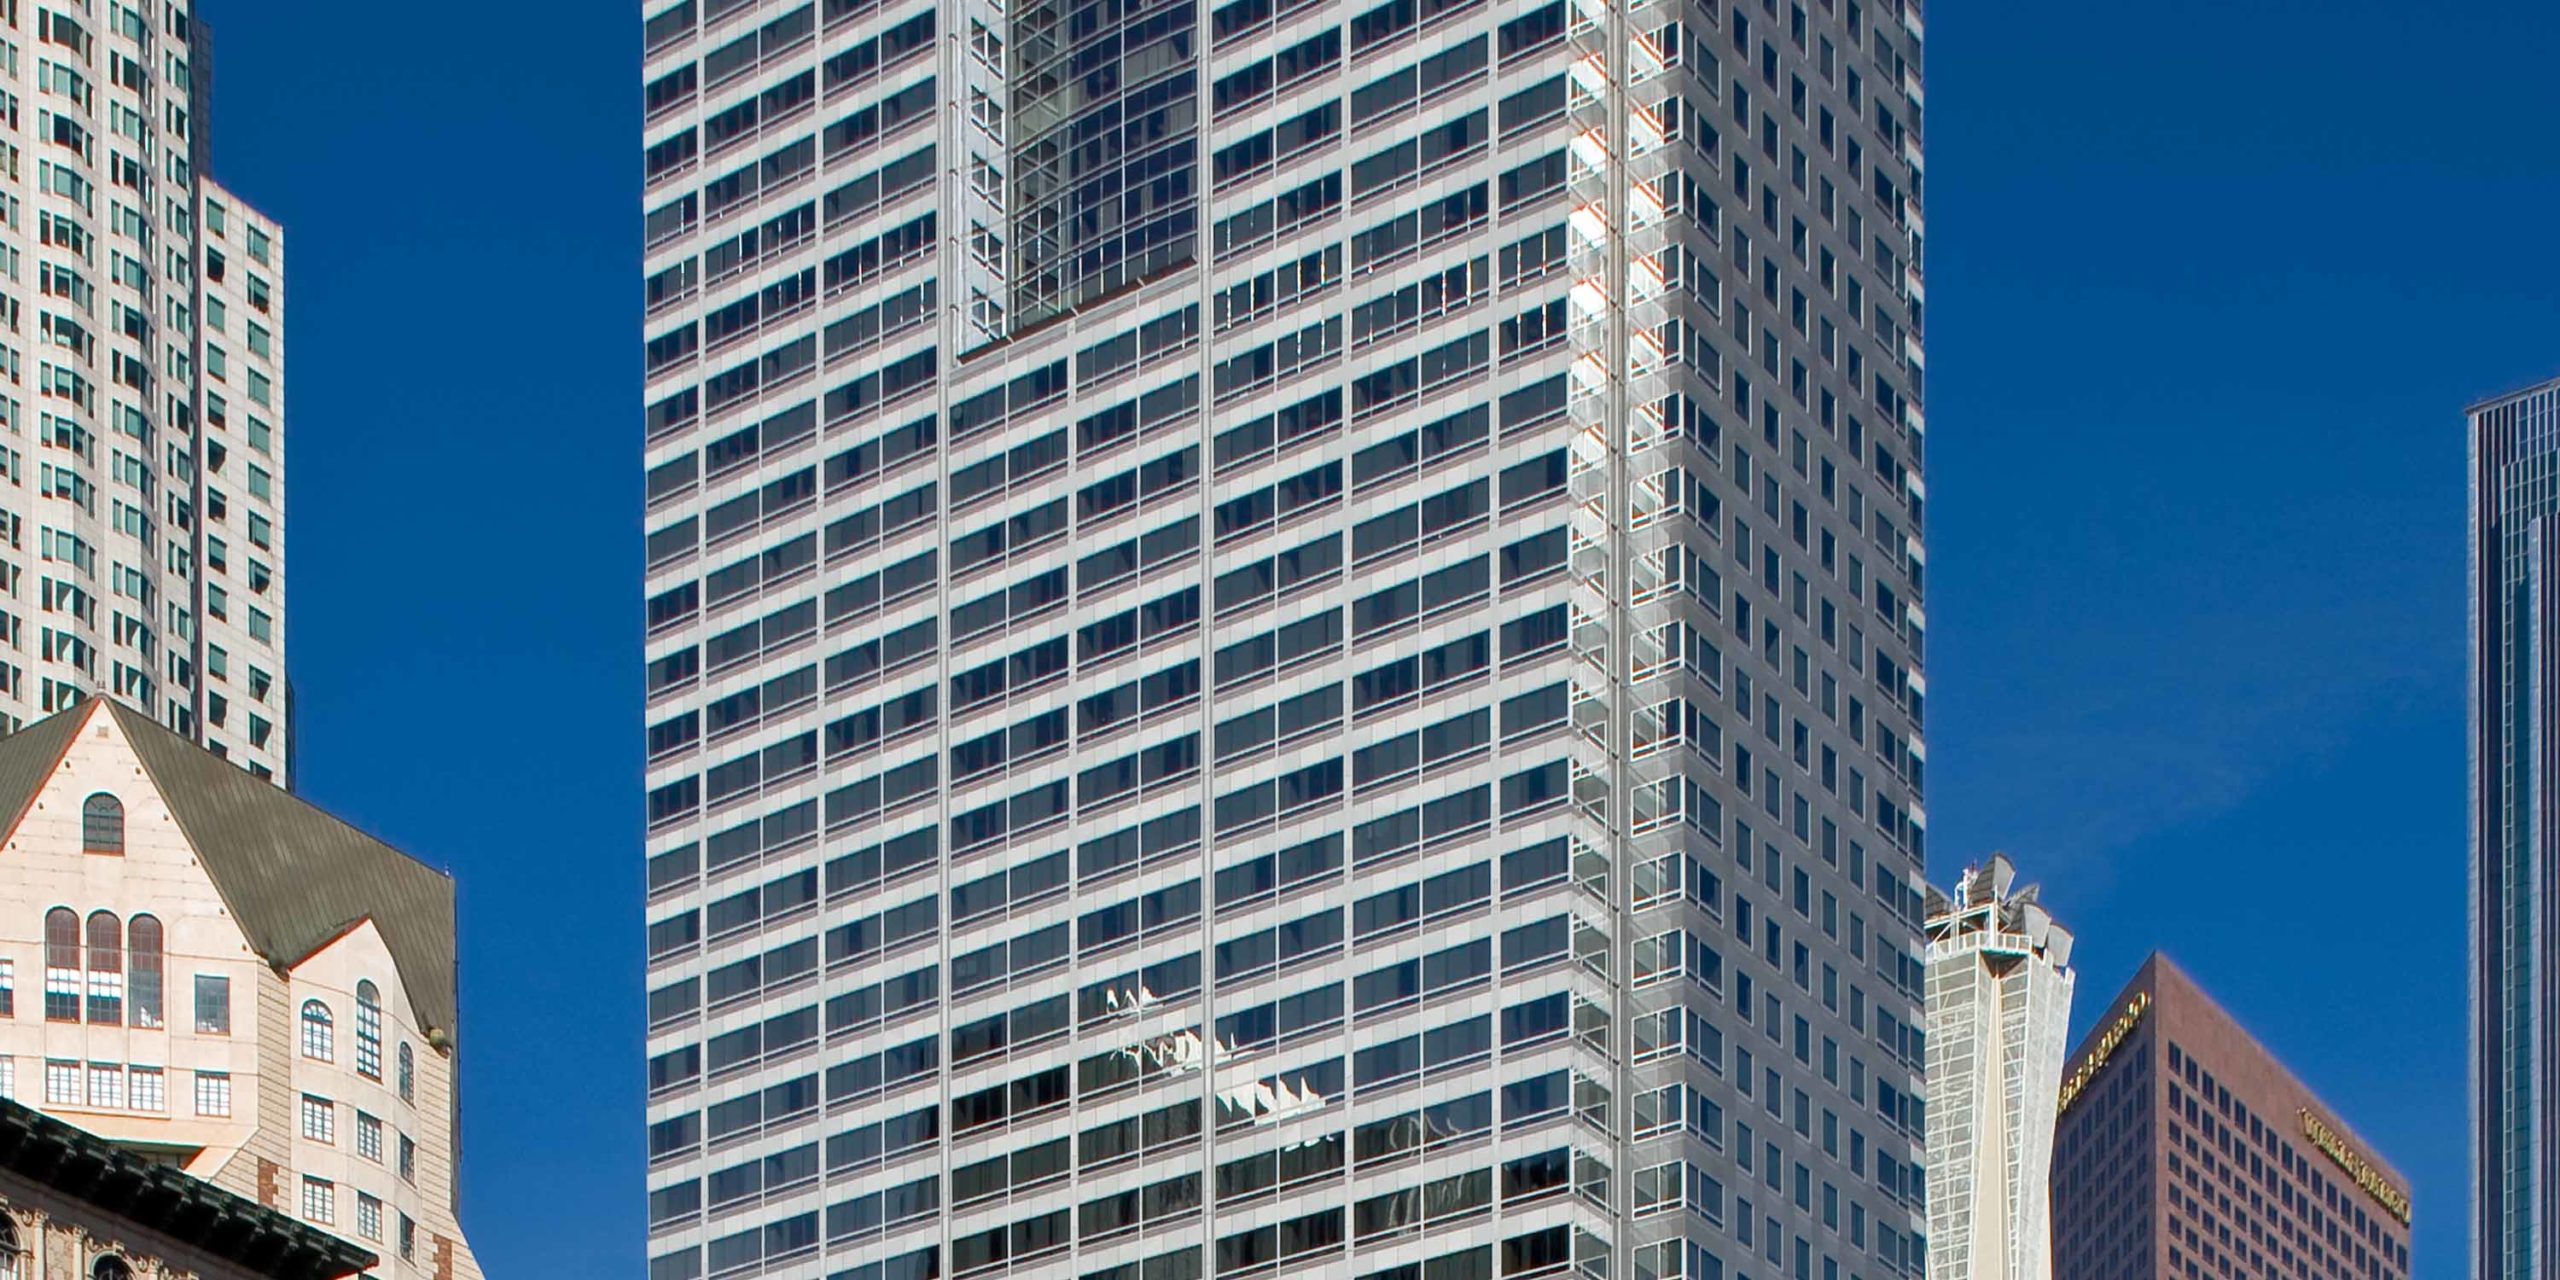 Gas Company Tower header image #4